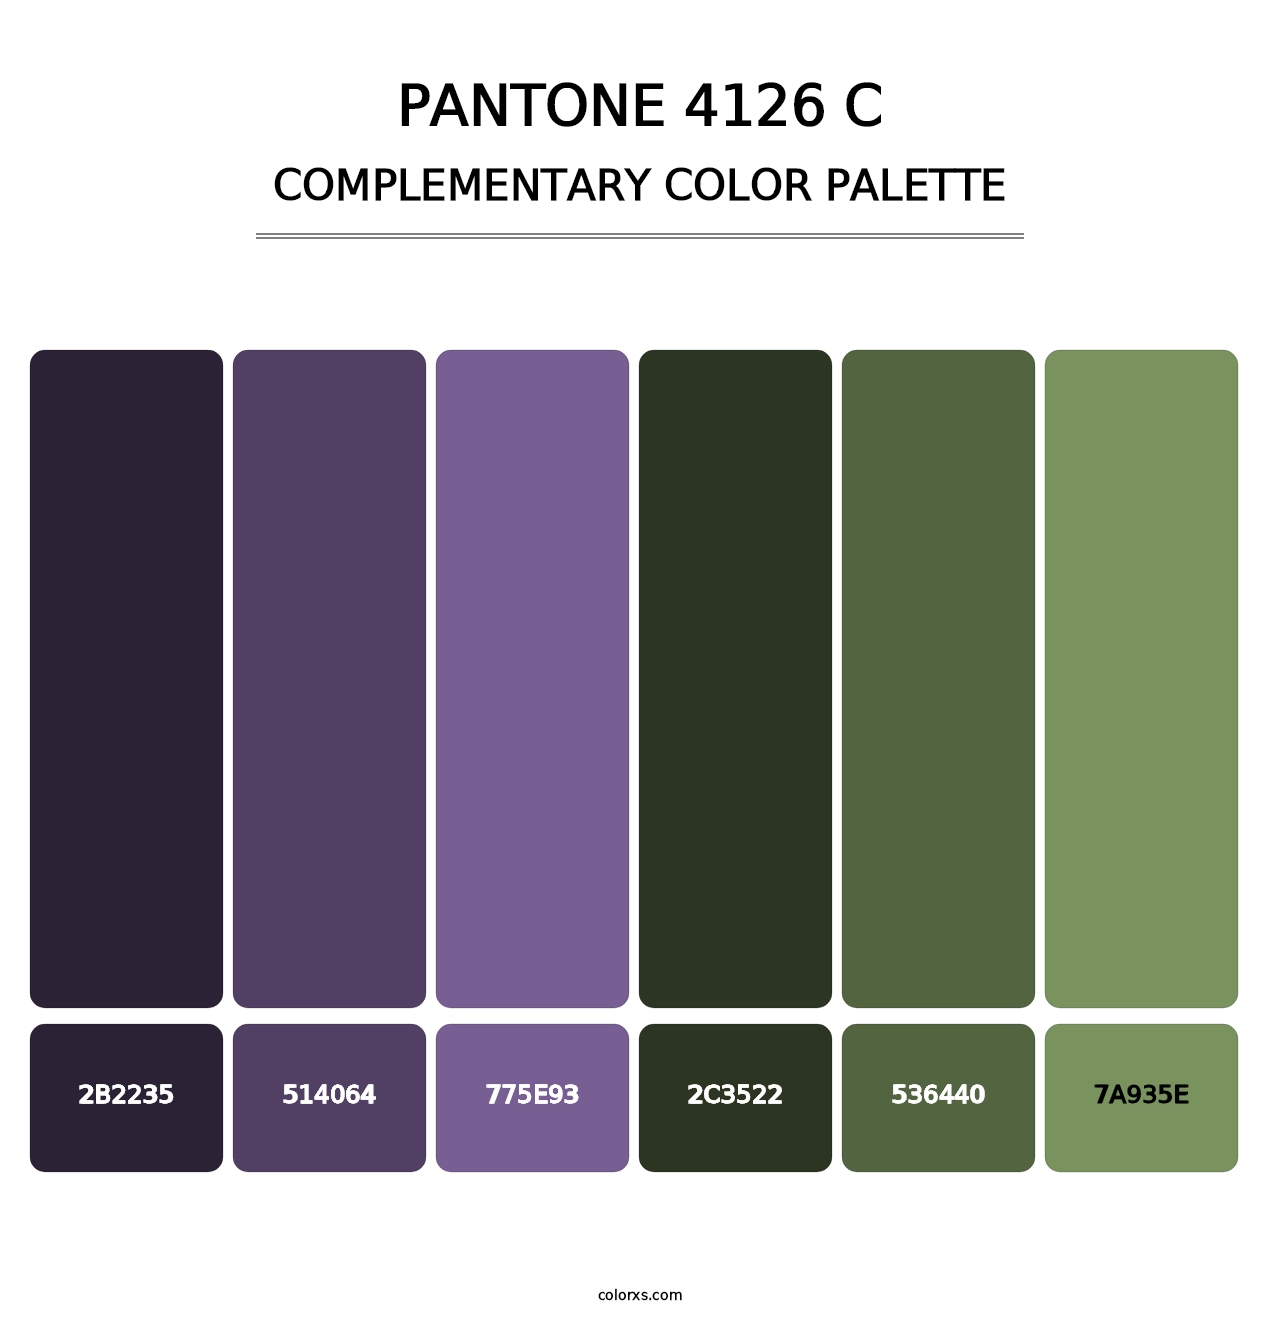 PANTONE 4126 C - Complementary Color Palette